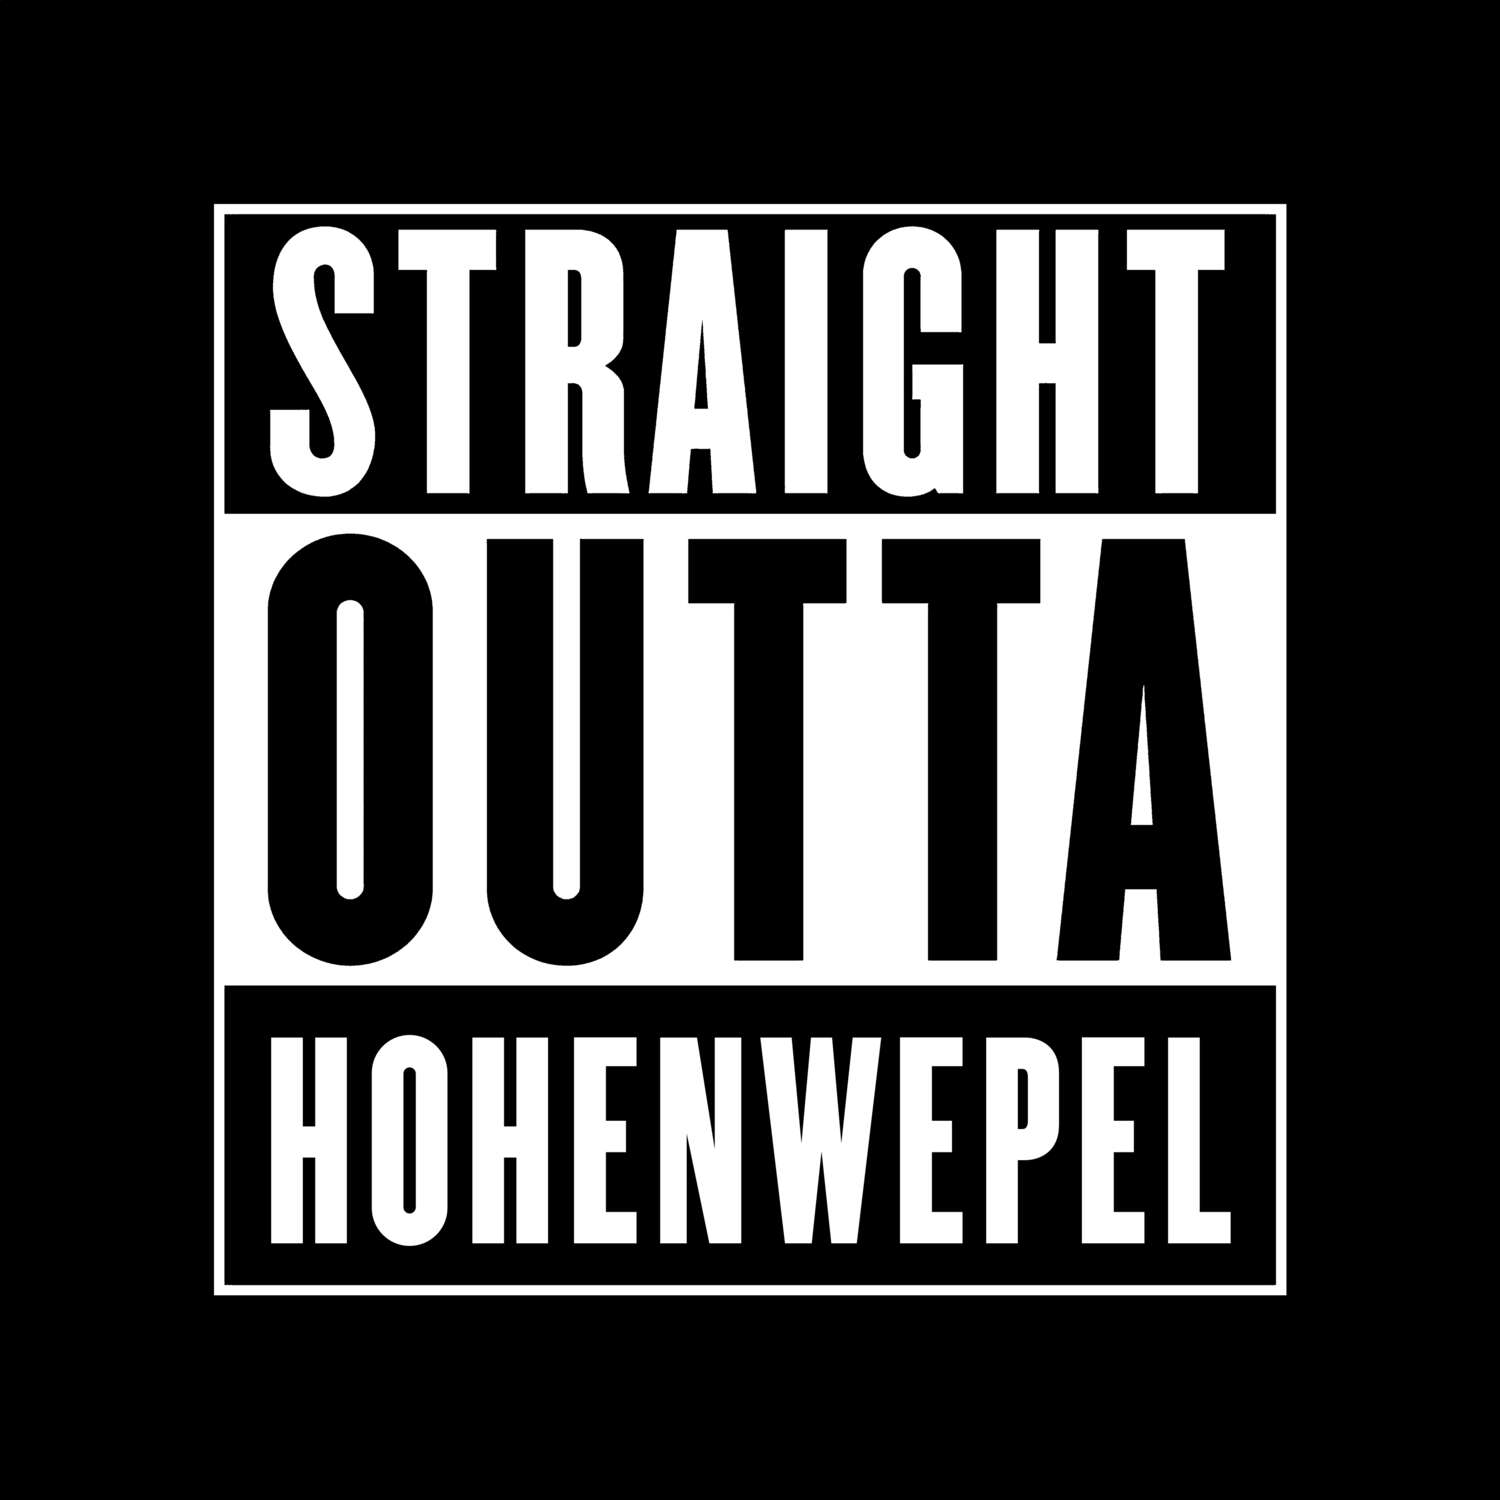 Hohenwepel T-Shirt »Straight Outta«